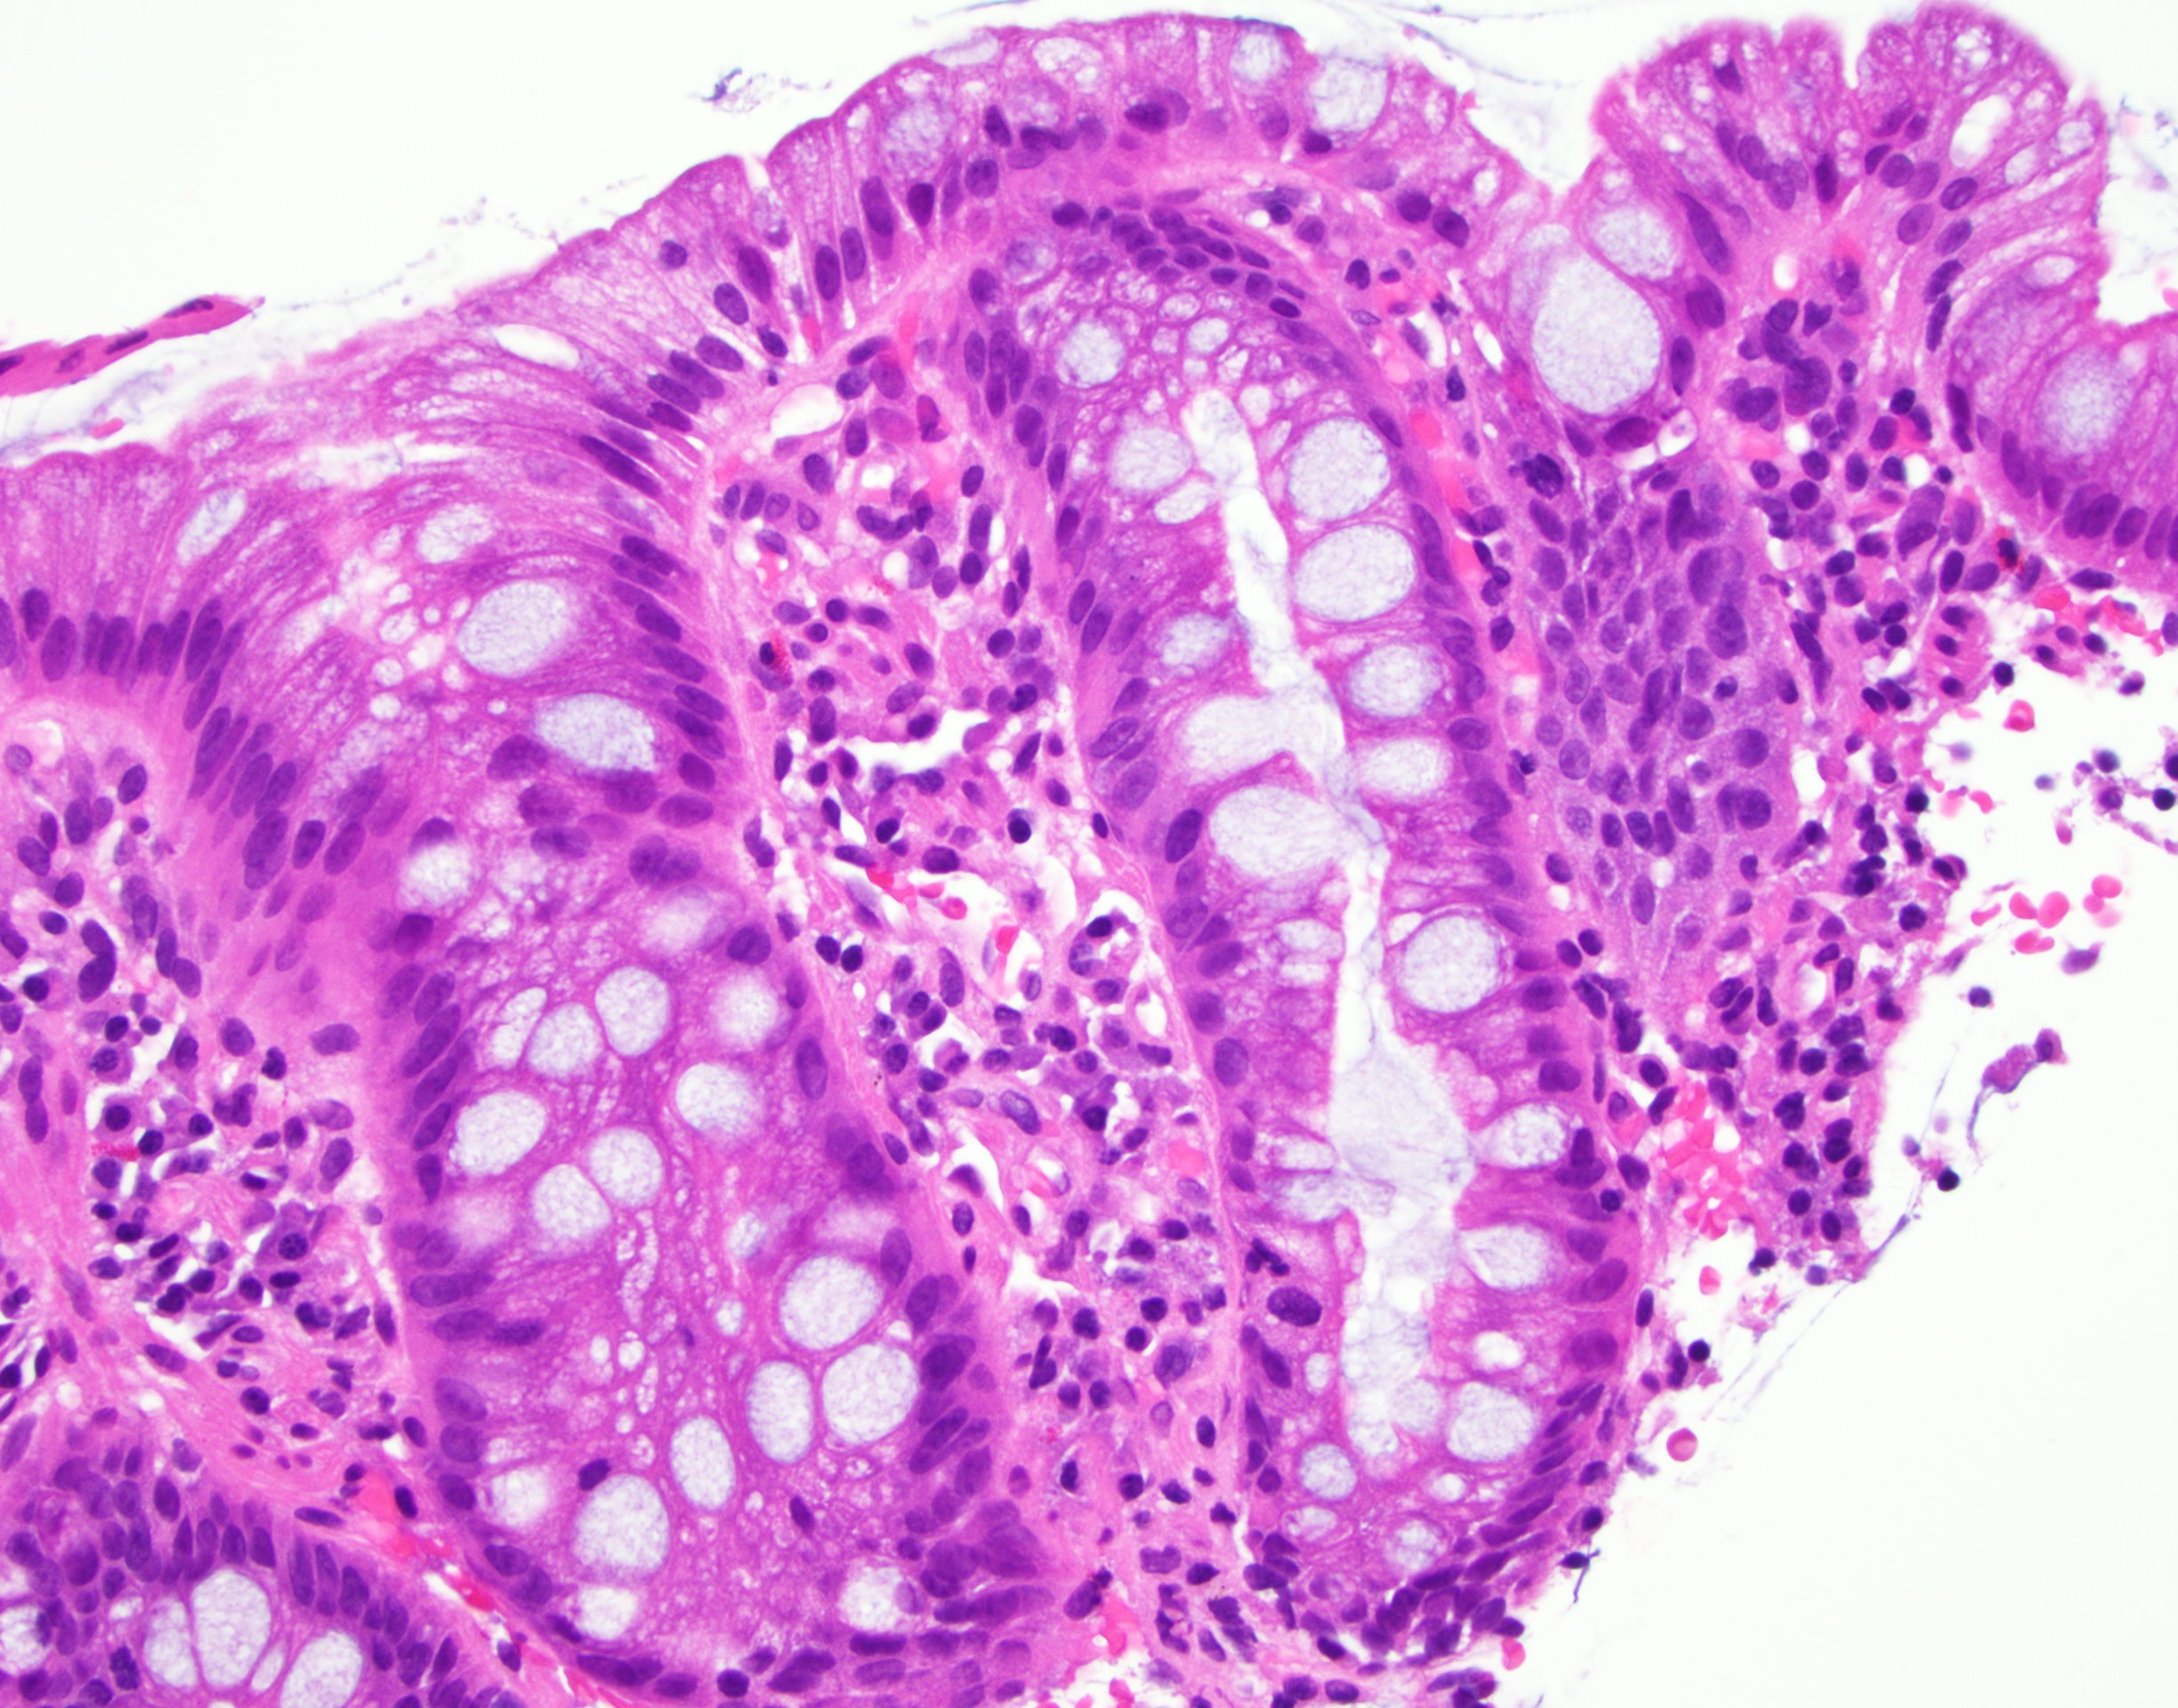 barretts esophagus histology